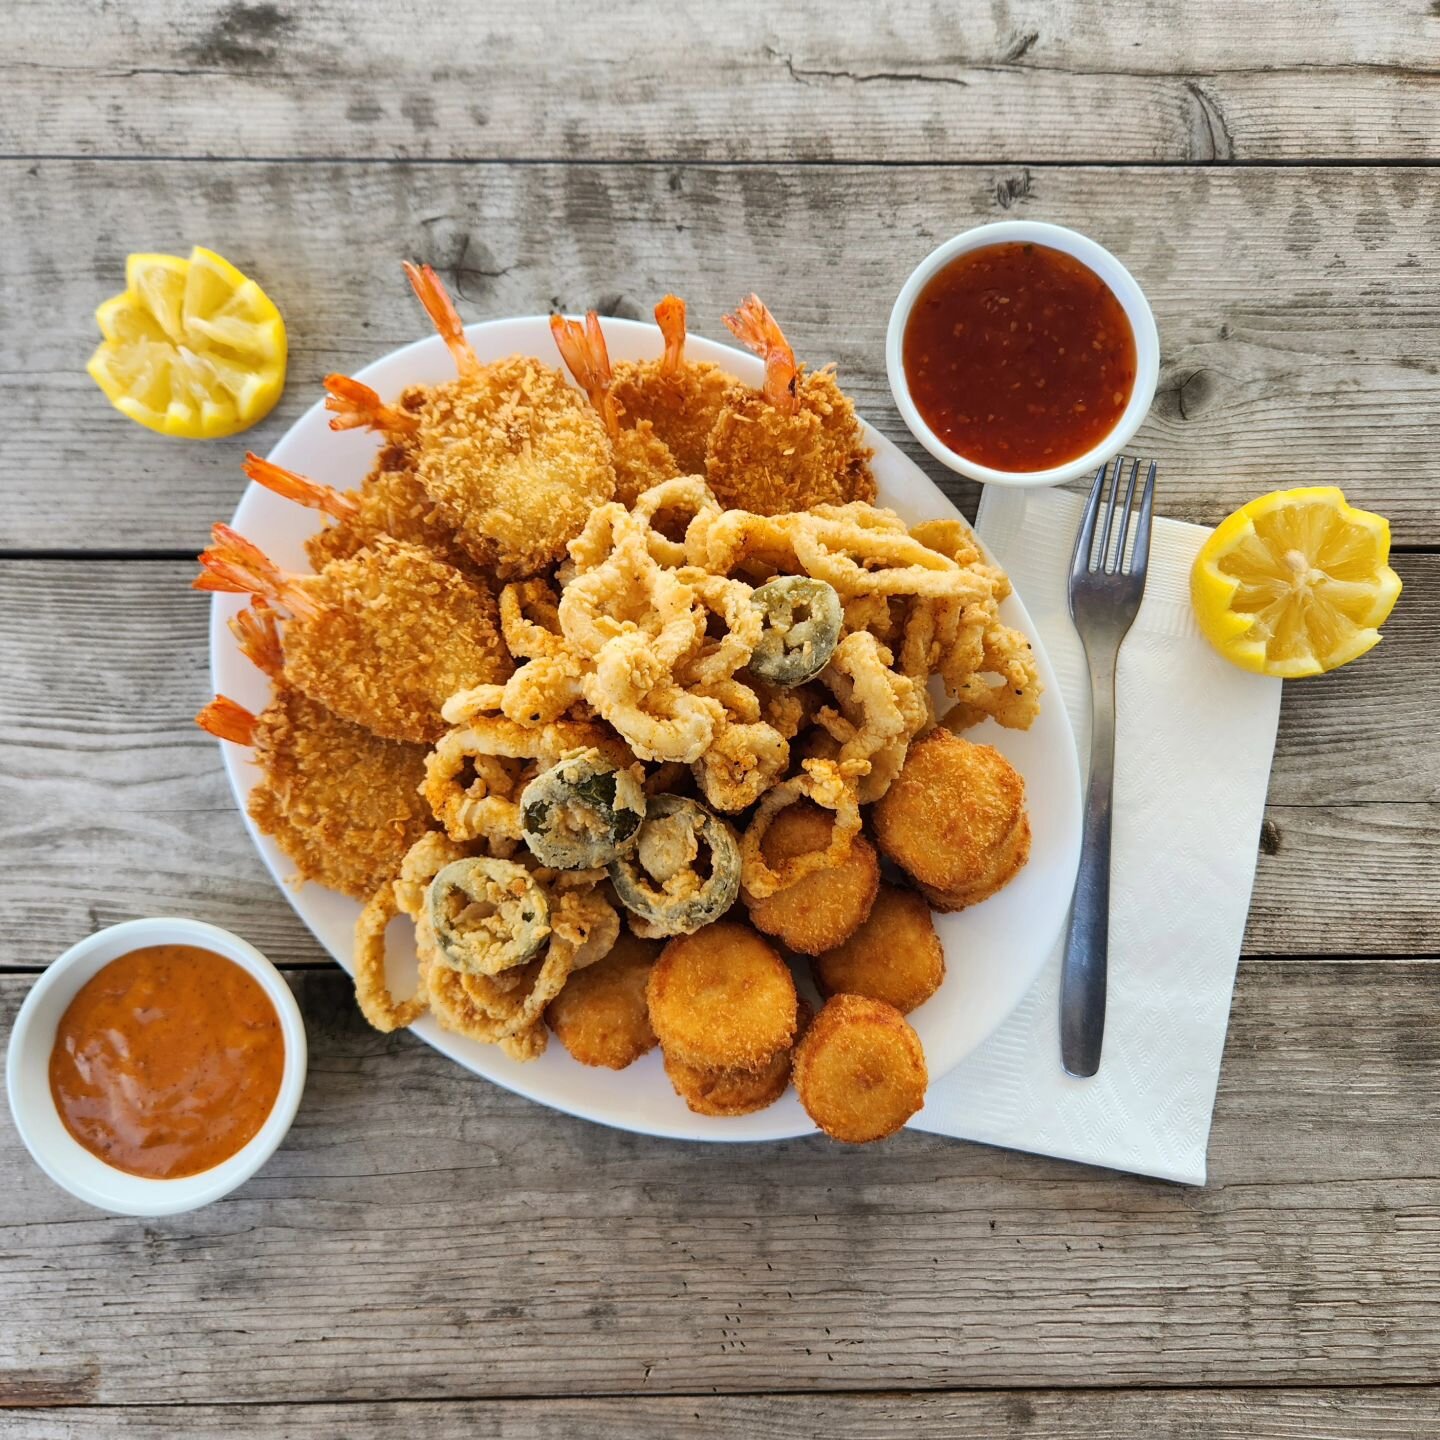 Seafood Platter - Coconut Shrimp, Breaded Scallops, Crispy Calamari and Dips